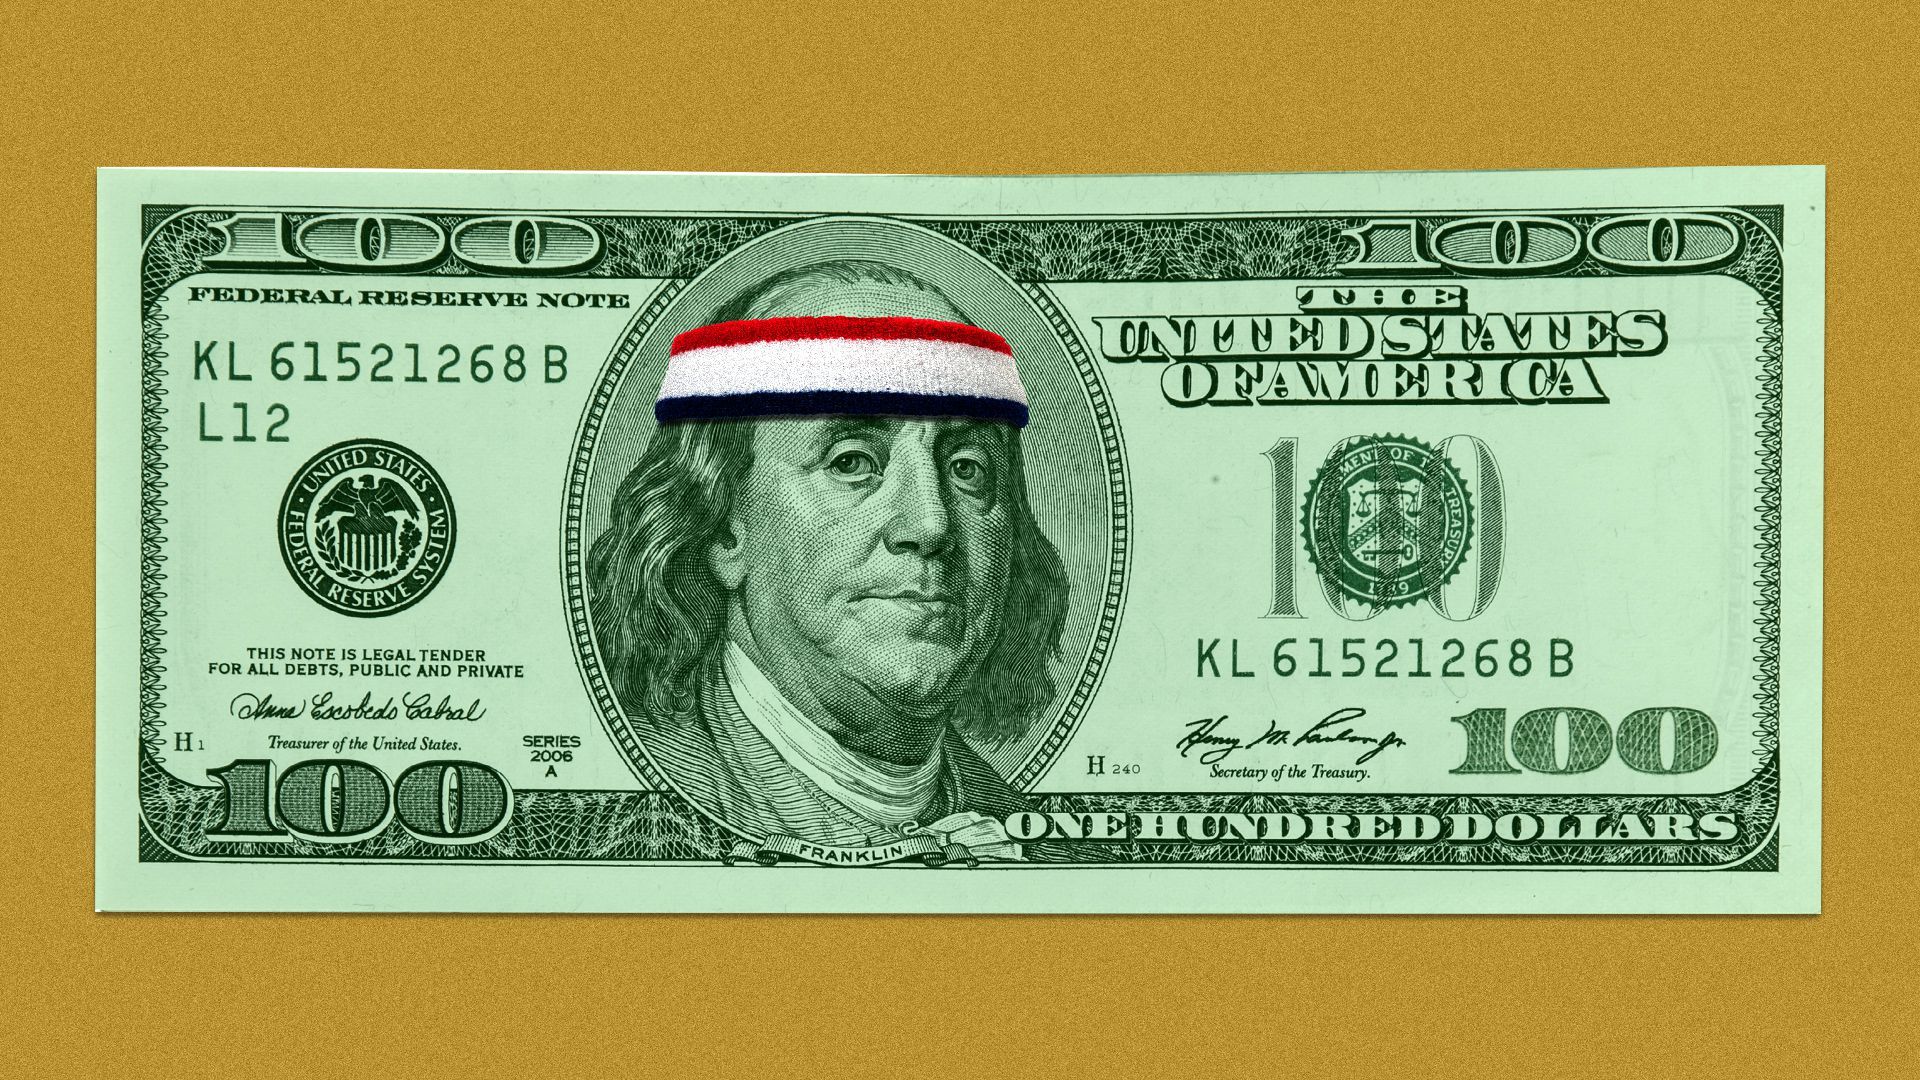 Illustration of Ben Franklin on $100 bill wearing a sweatband